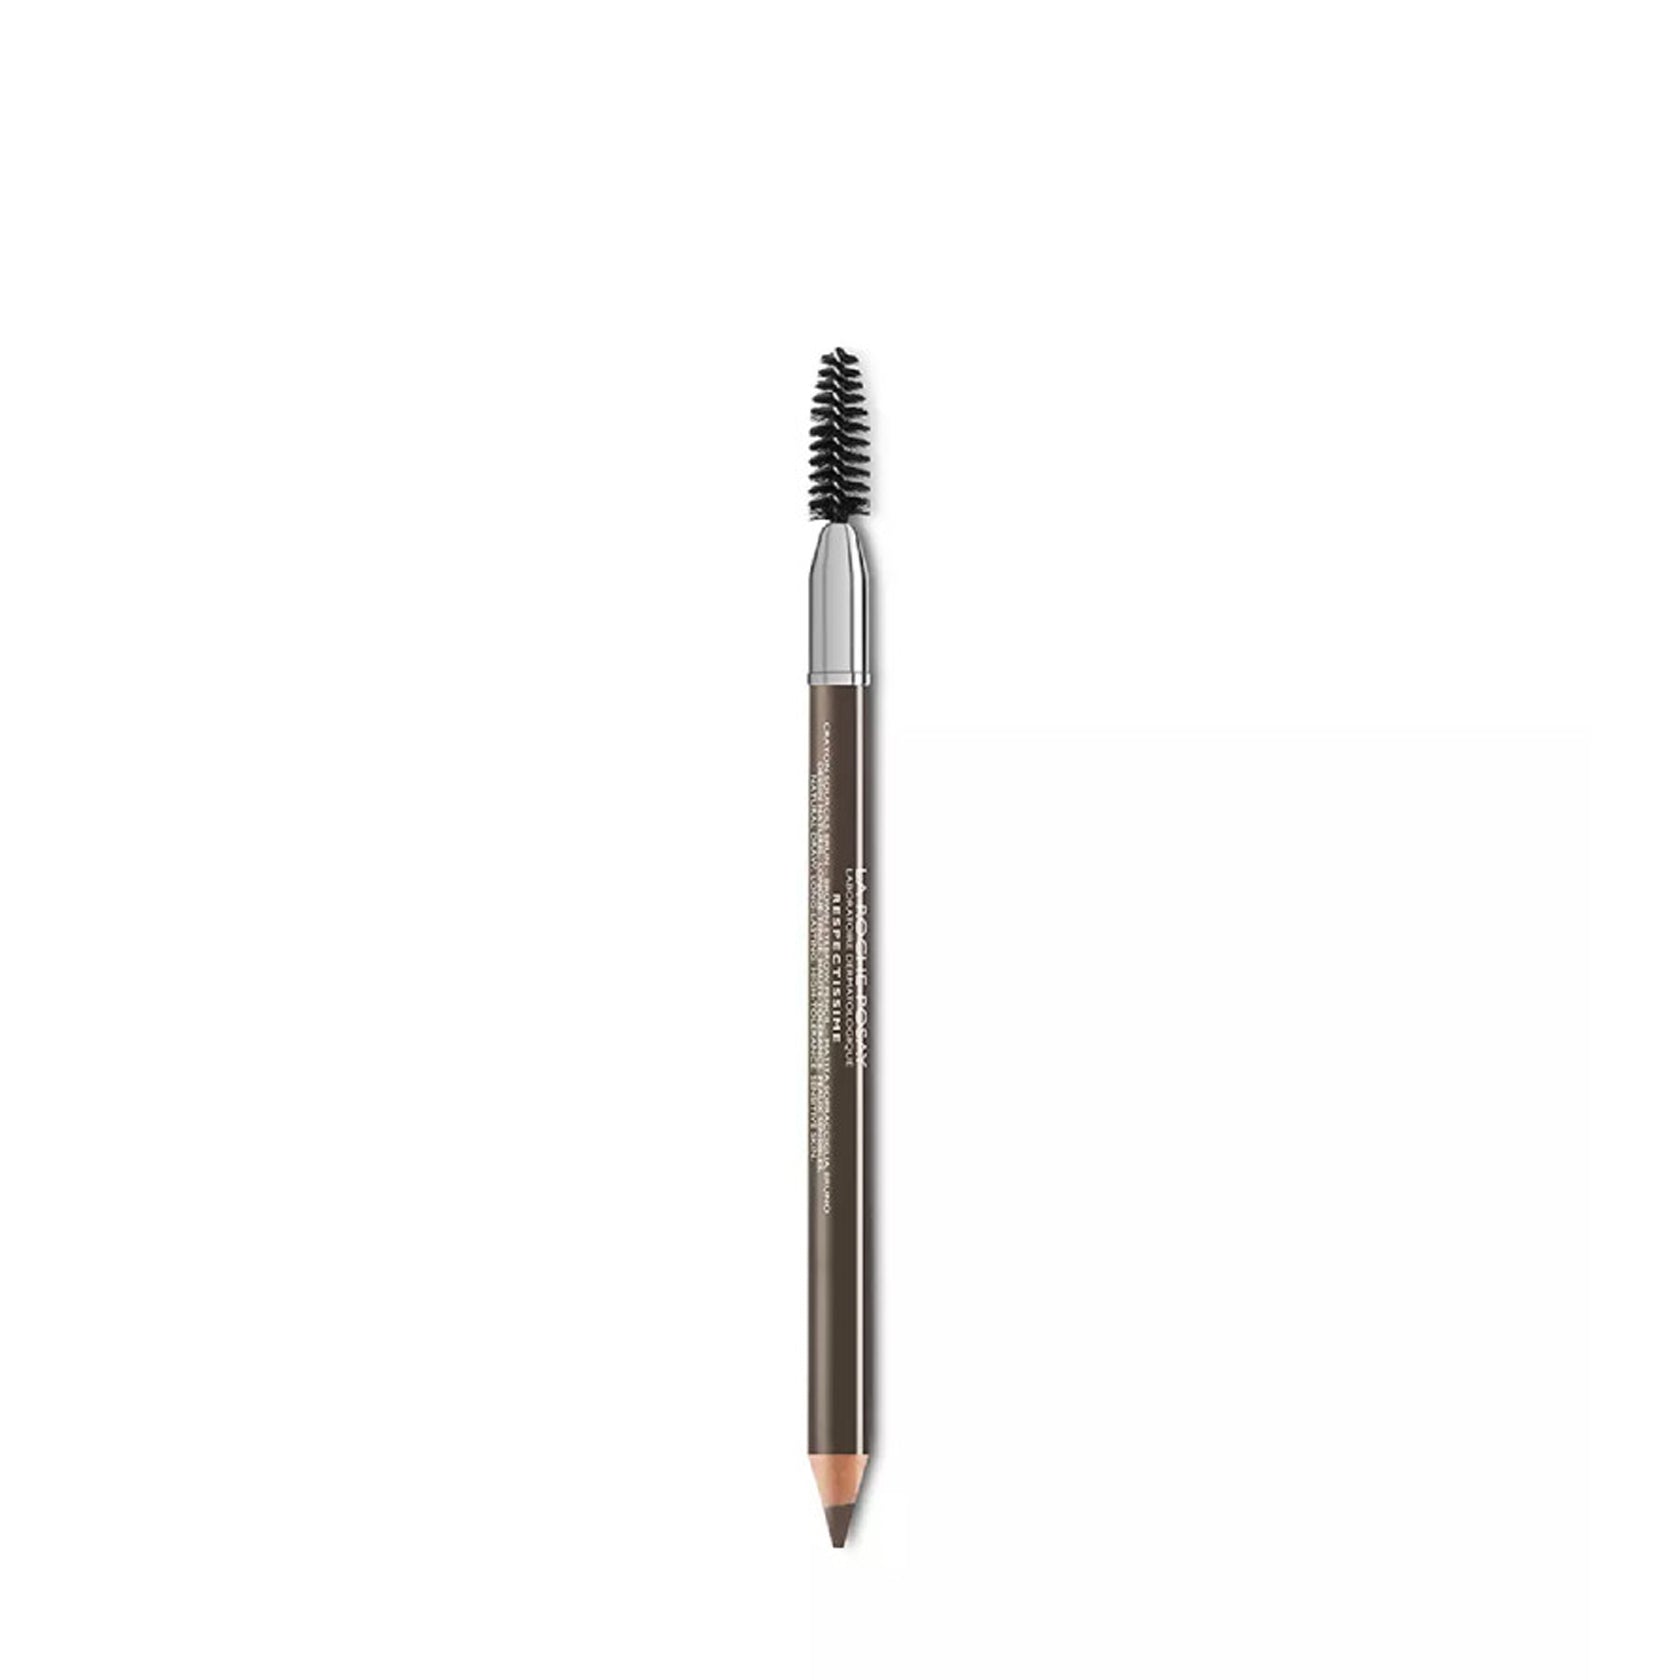 La Roche-Posay Respectissime Brown Eyebrown Pencil 1.3g